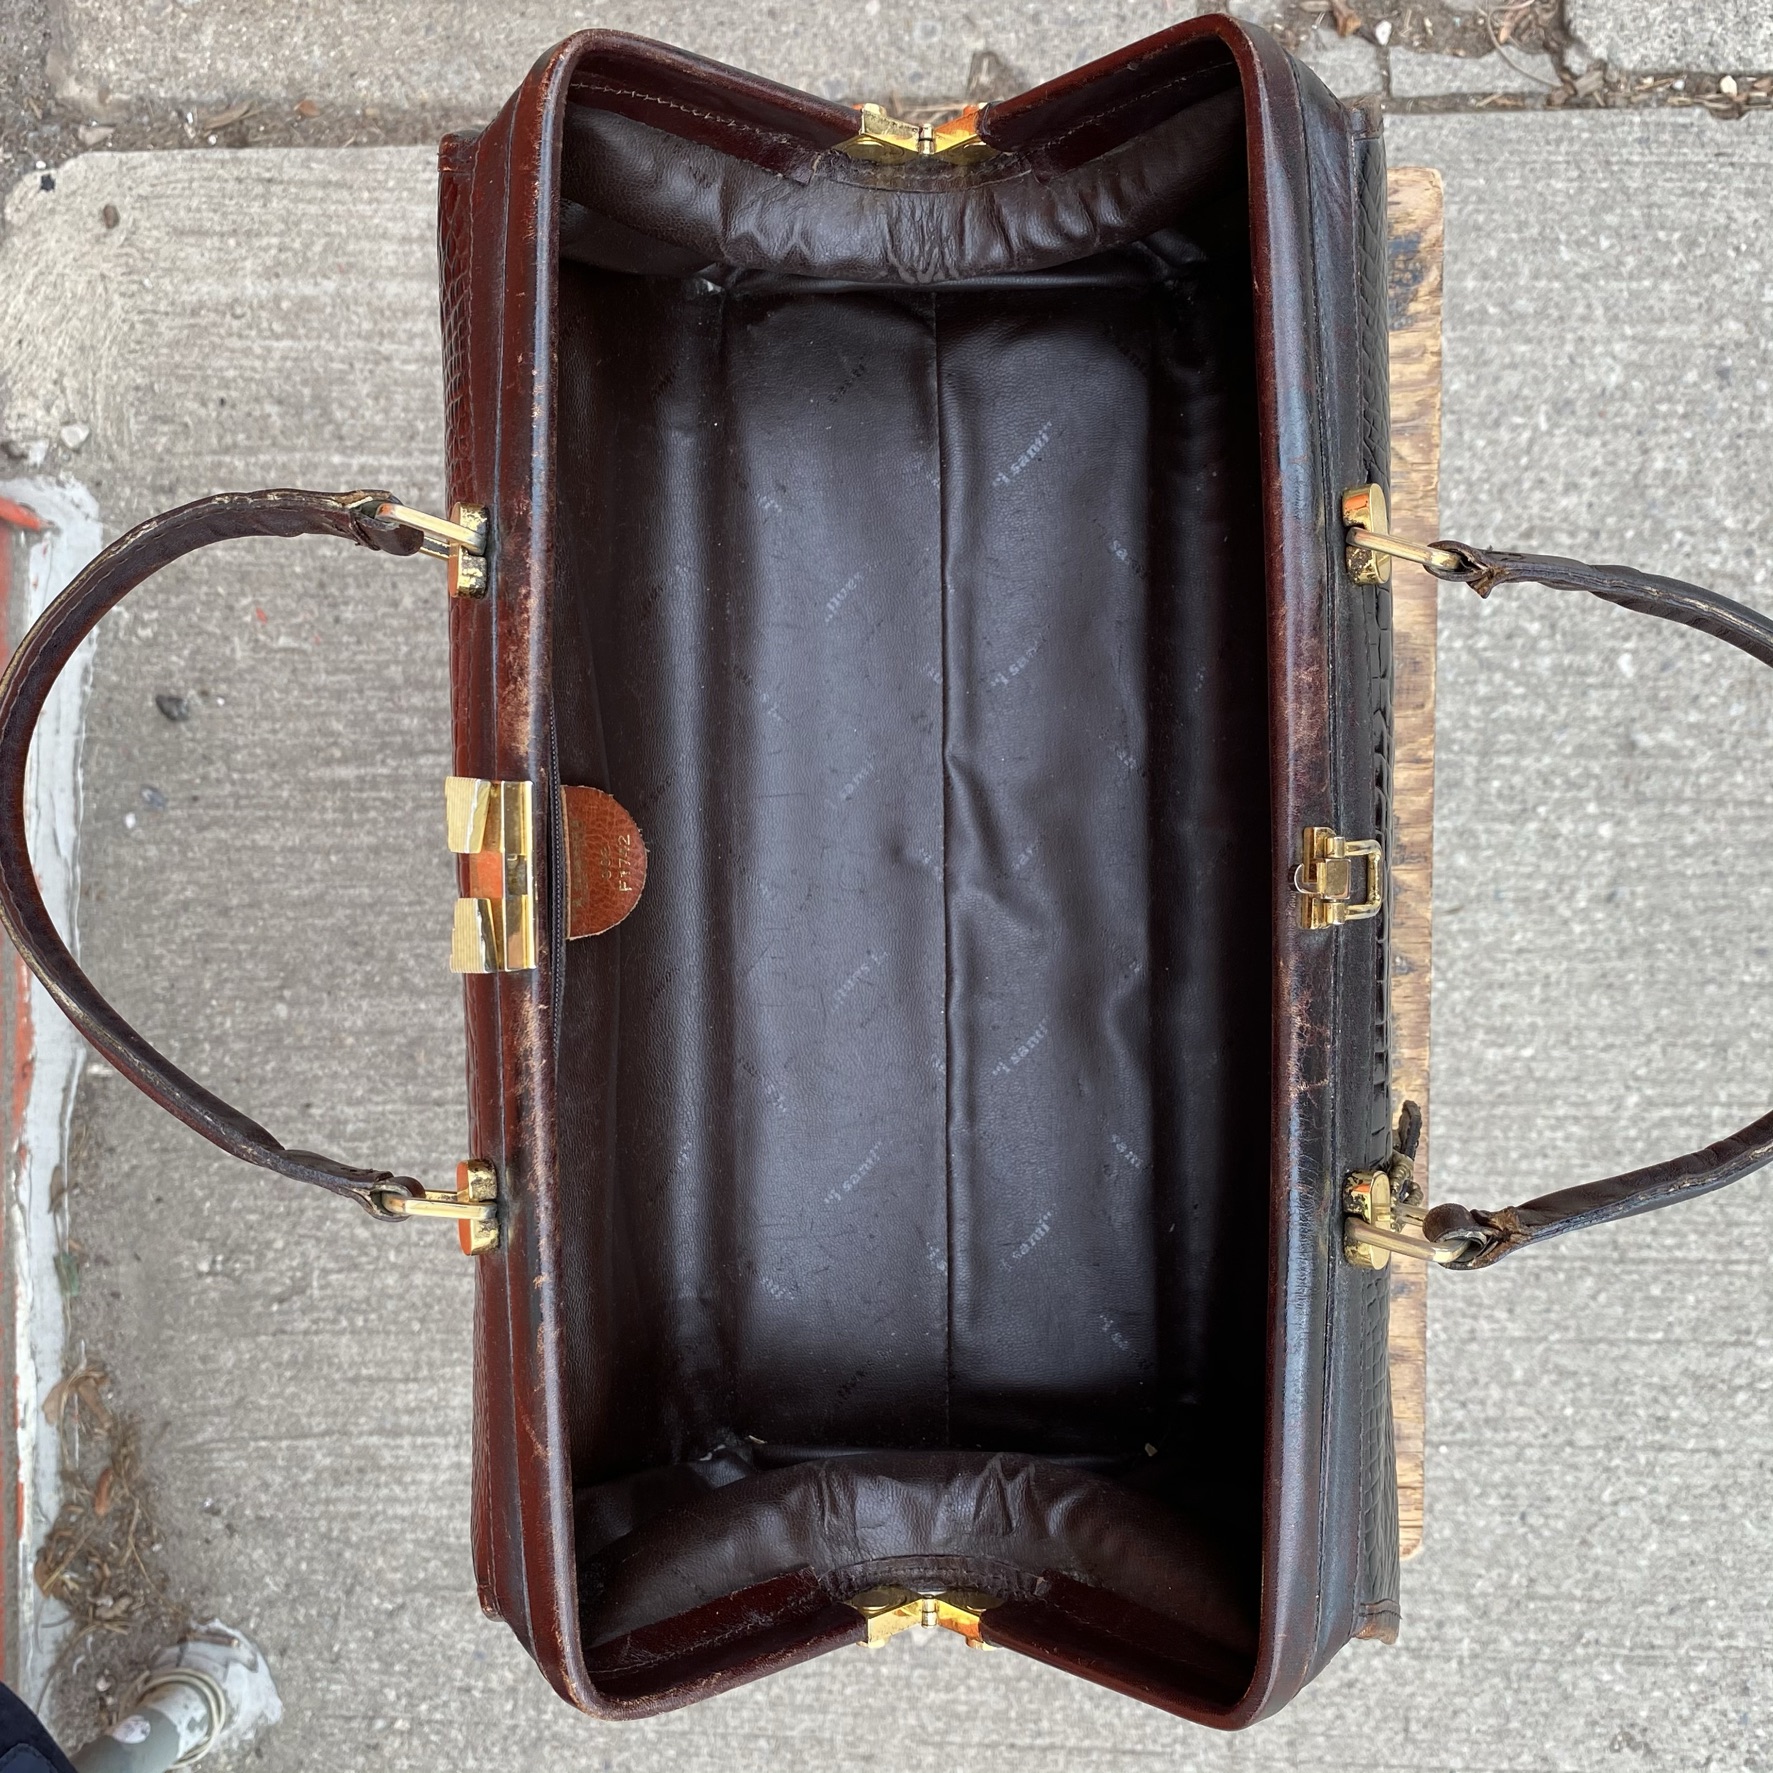 Italian Leather Large Gladstone Bag, The GassanoL